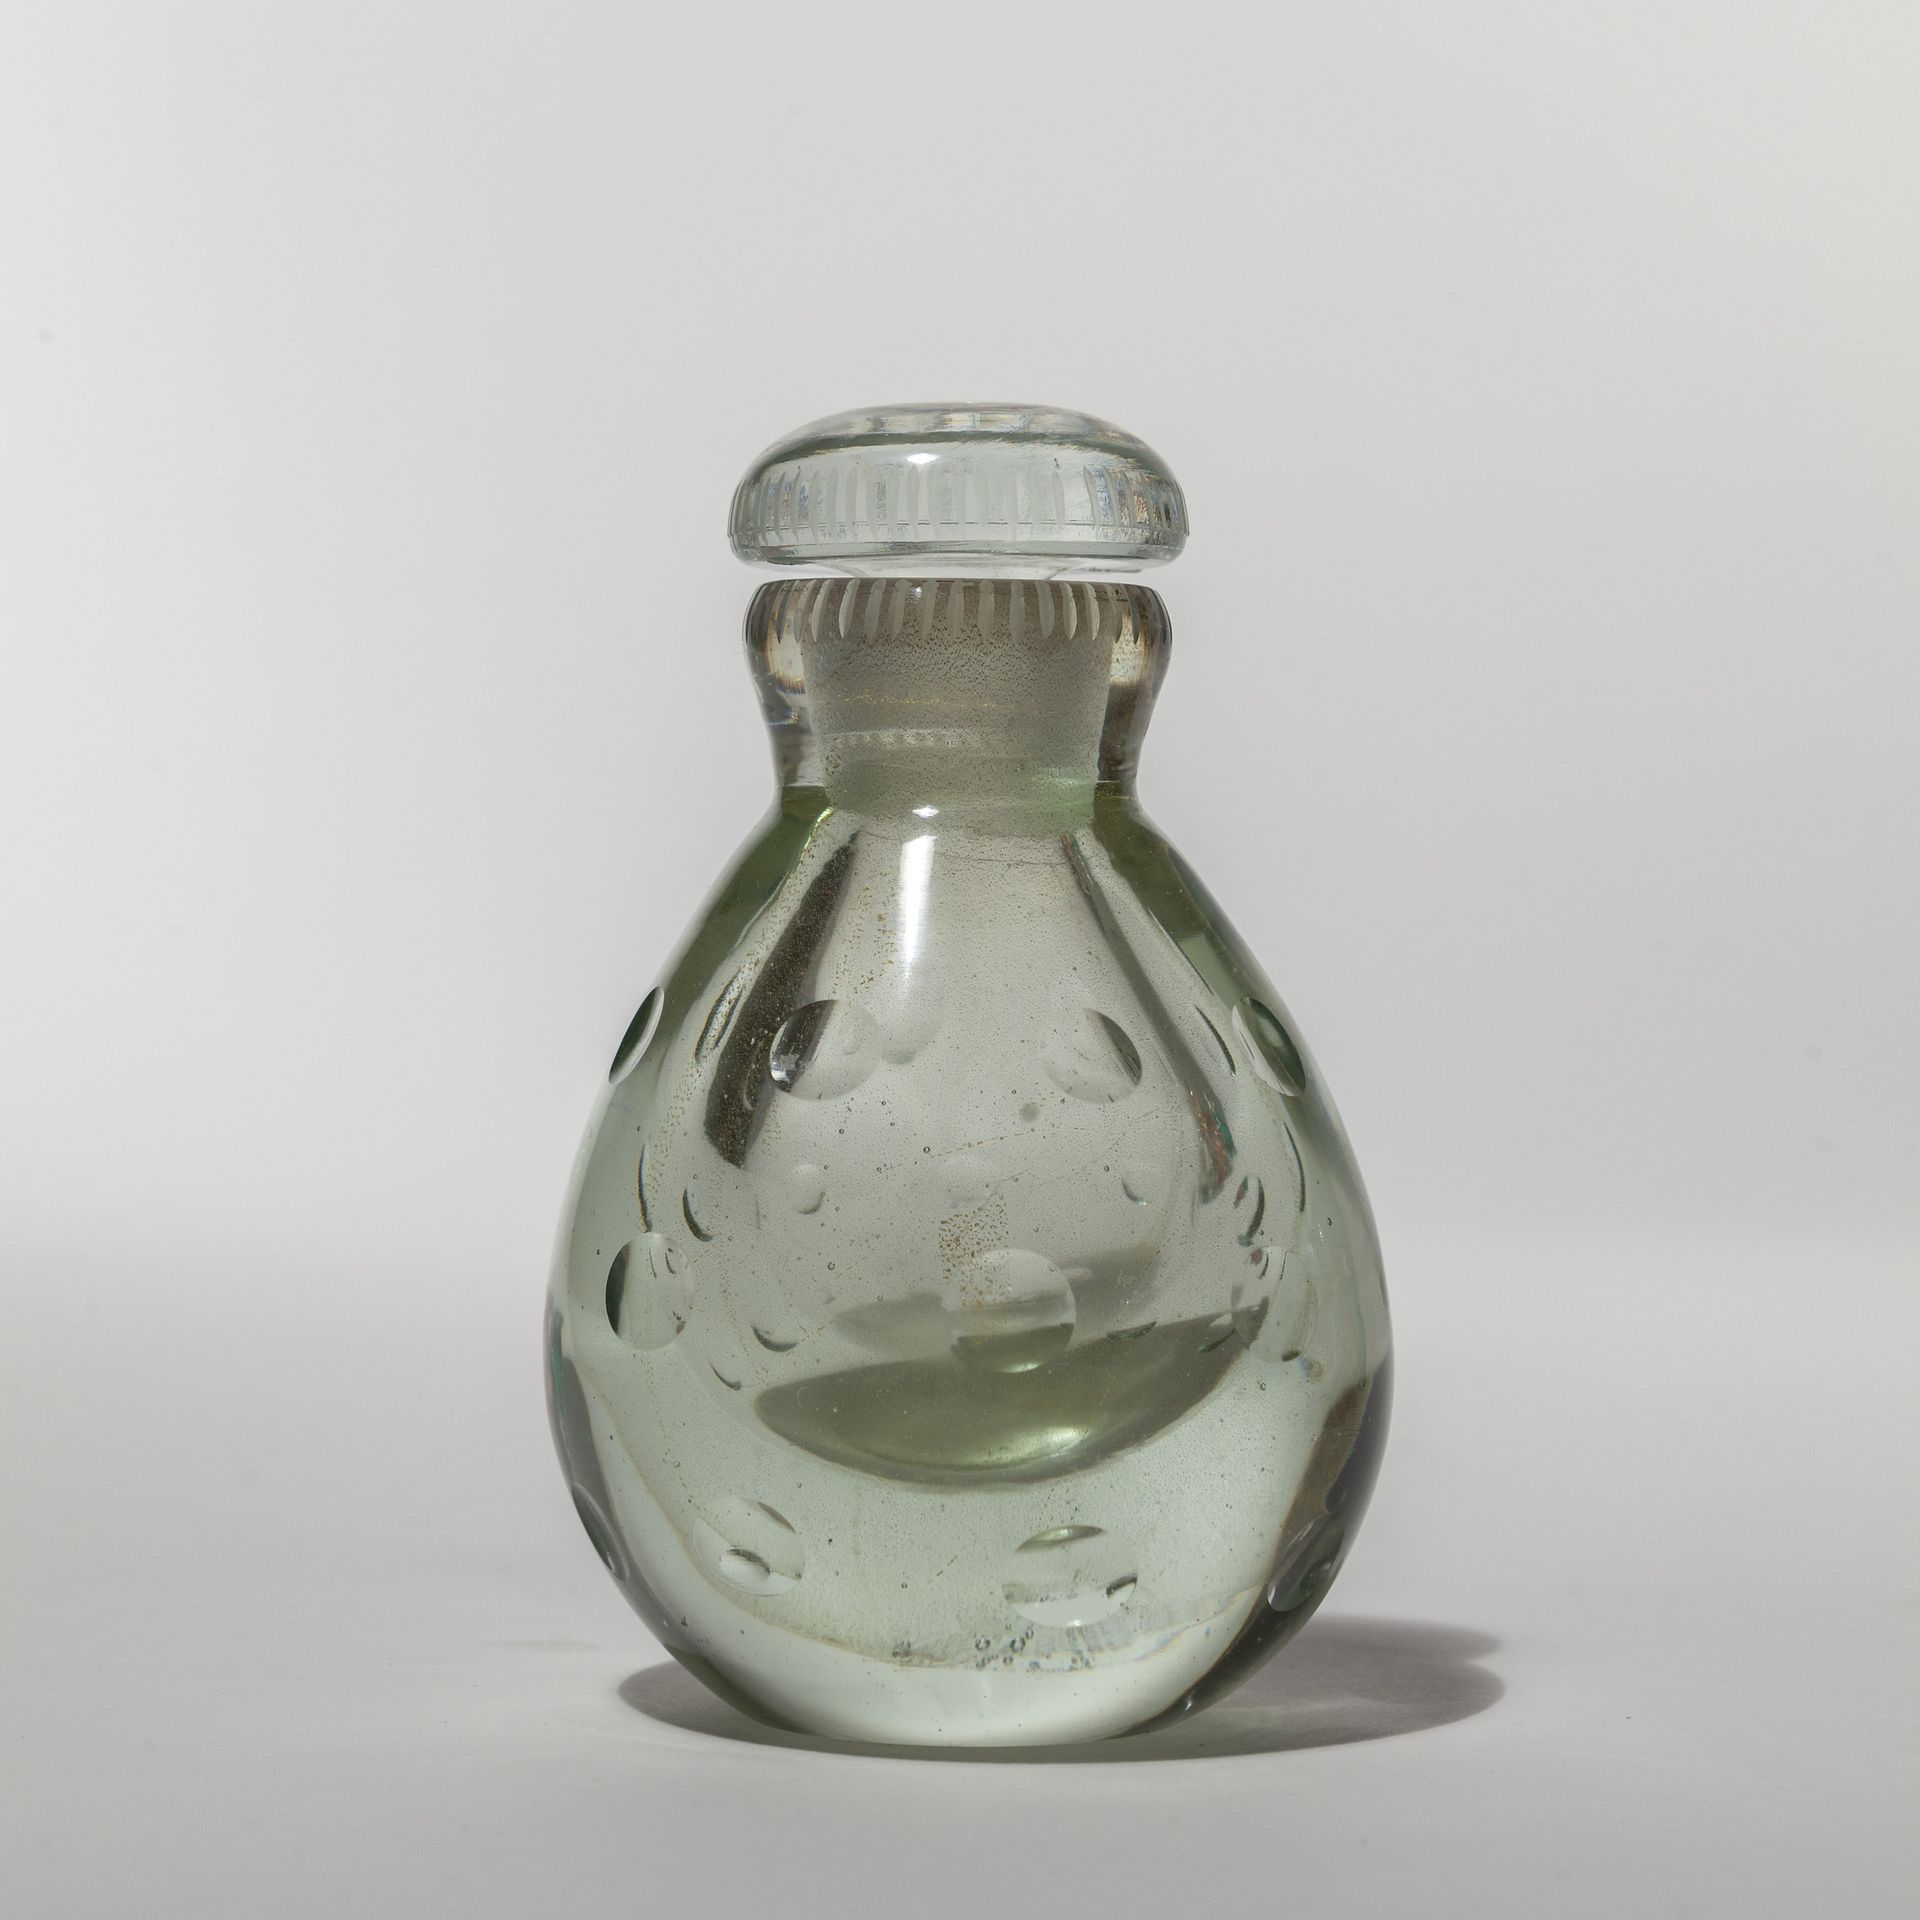 SCARPA CARLO VENINI CARLO SCARPA VENINI
透明玻璃和金箔的香水瓶，有圆形的研磨装饰
1930年代
酸性标记 "venini&hellip;